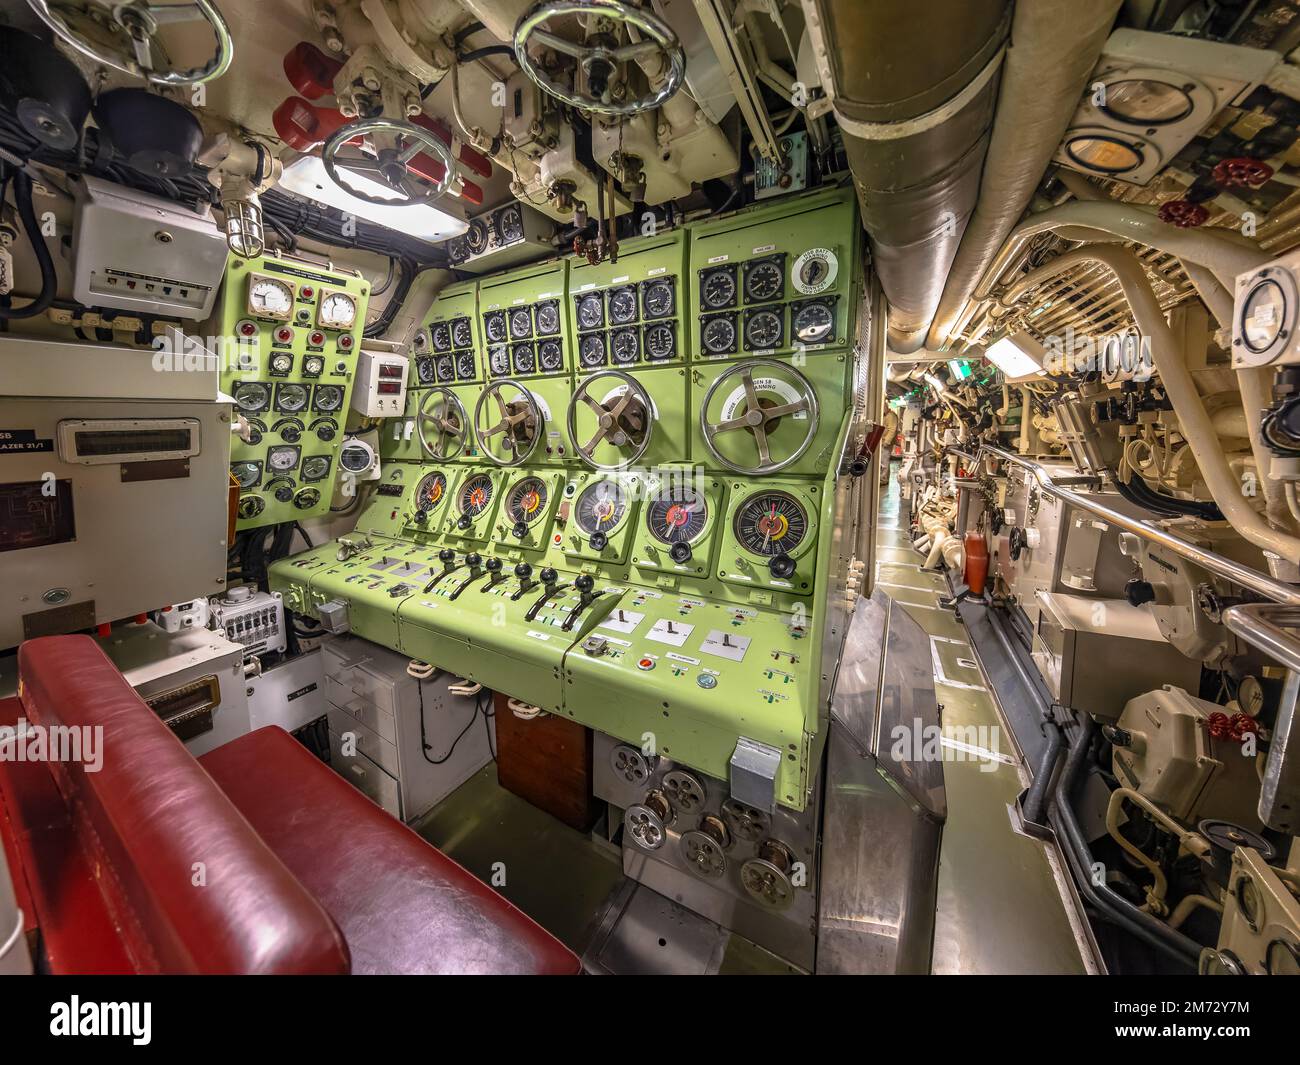 Interior of Submarine. Periscope and control room area. Stock Photo